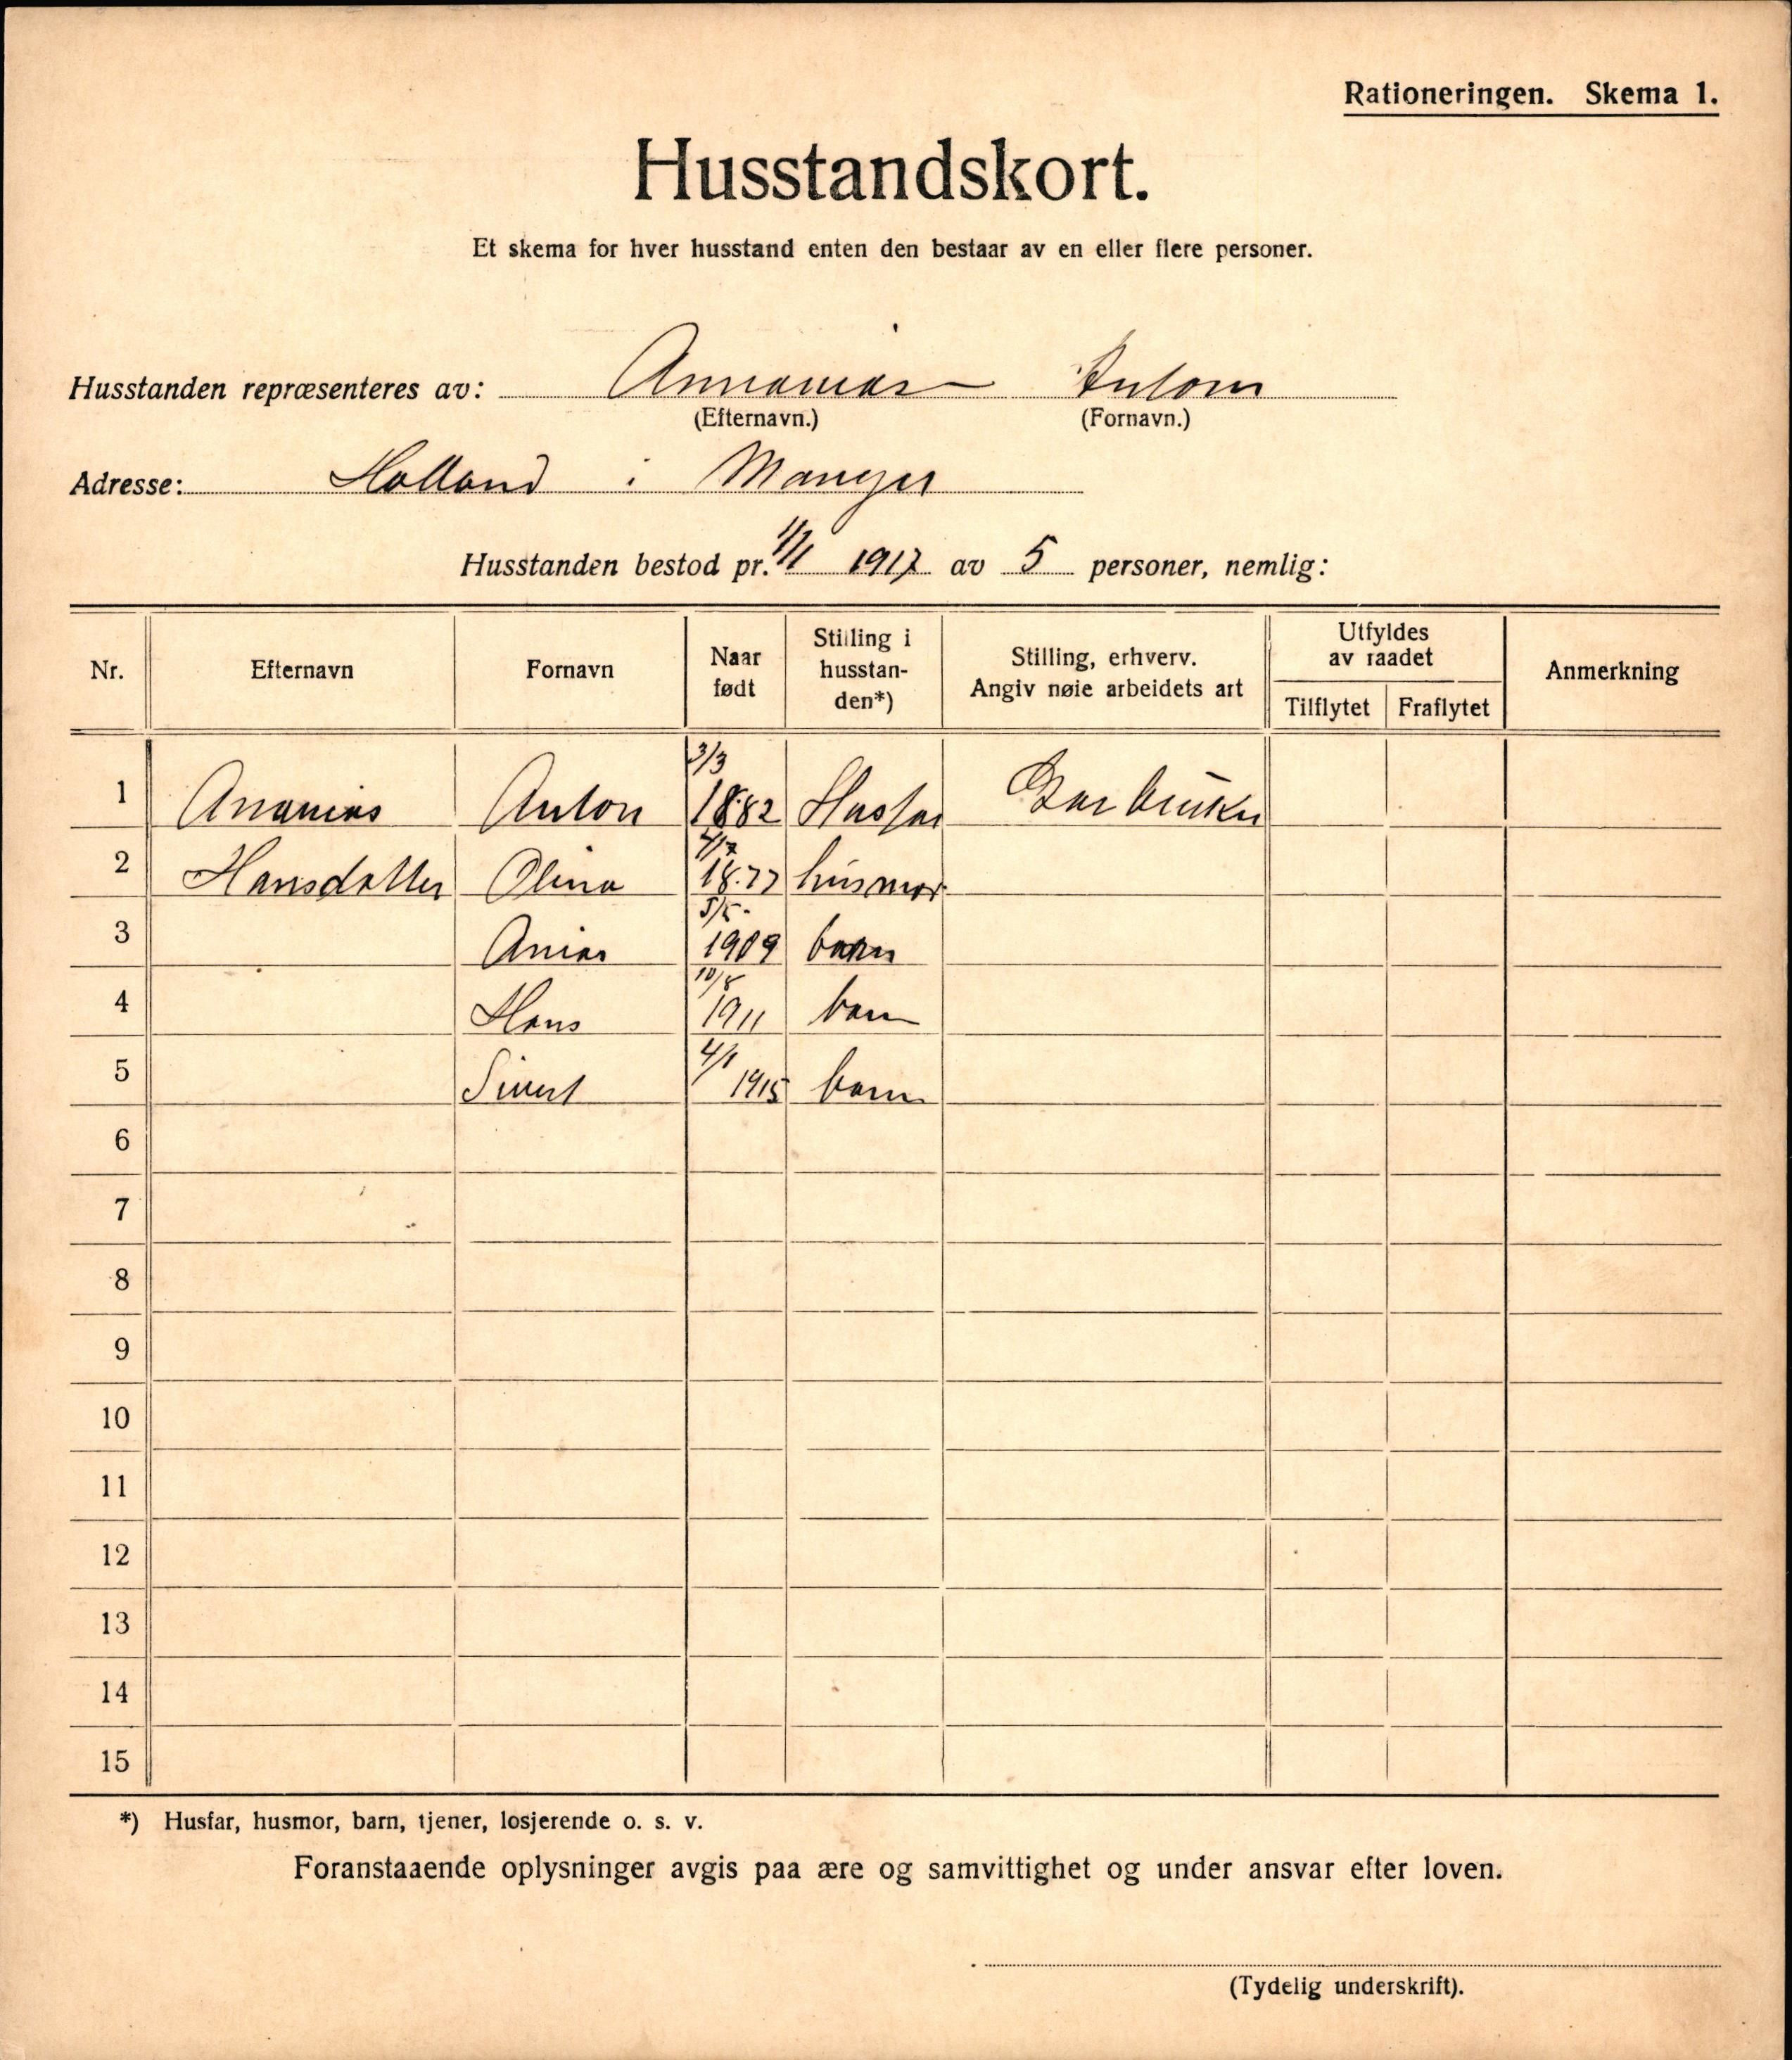 IKAH, Manger kommune, Provianteringsrådet, Husstander per 01.11.1917, 1917, s. 2